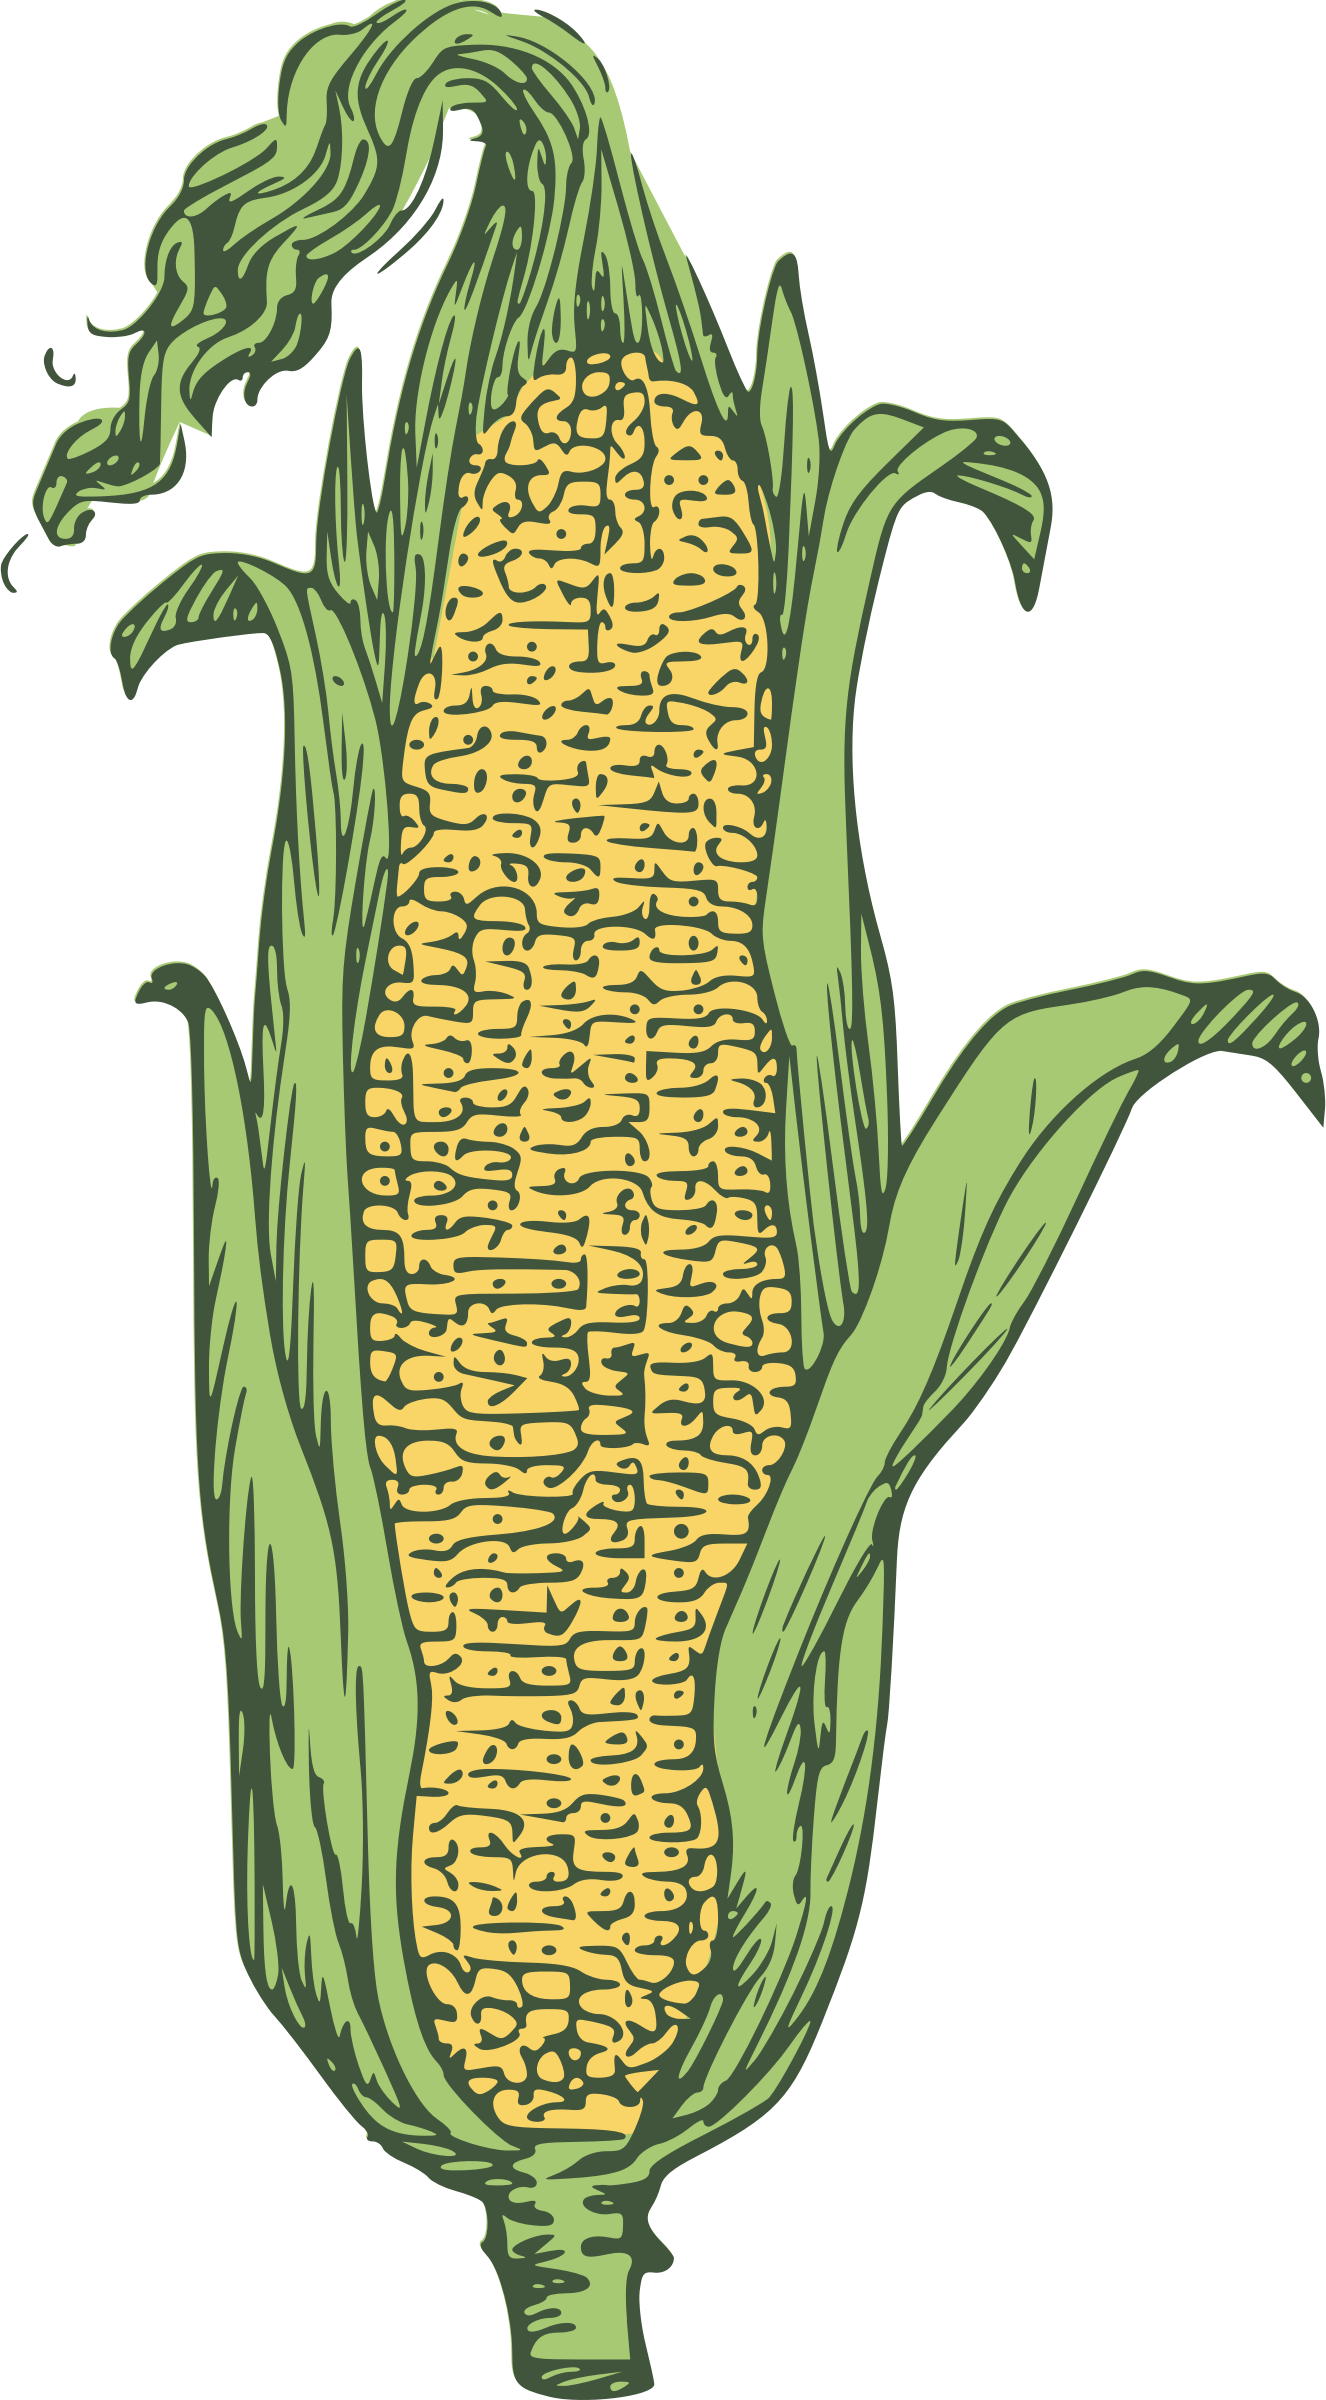 Candy corn Corn on the cob Popcorn Maize Ear.